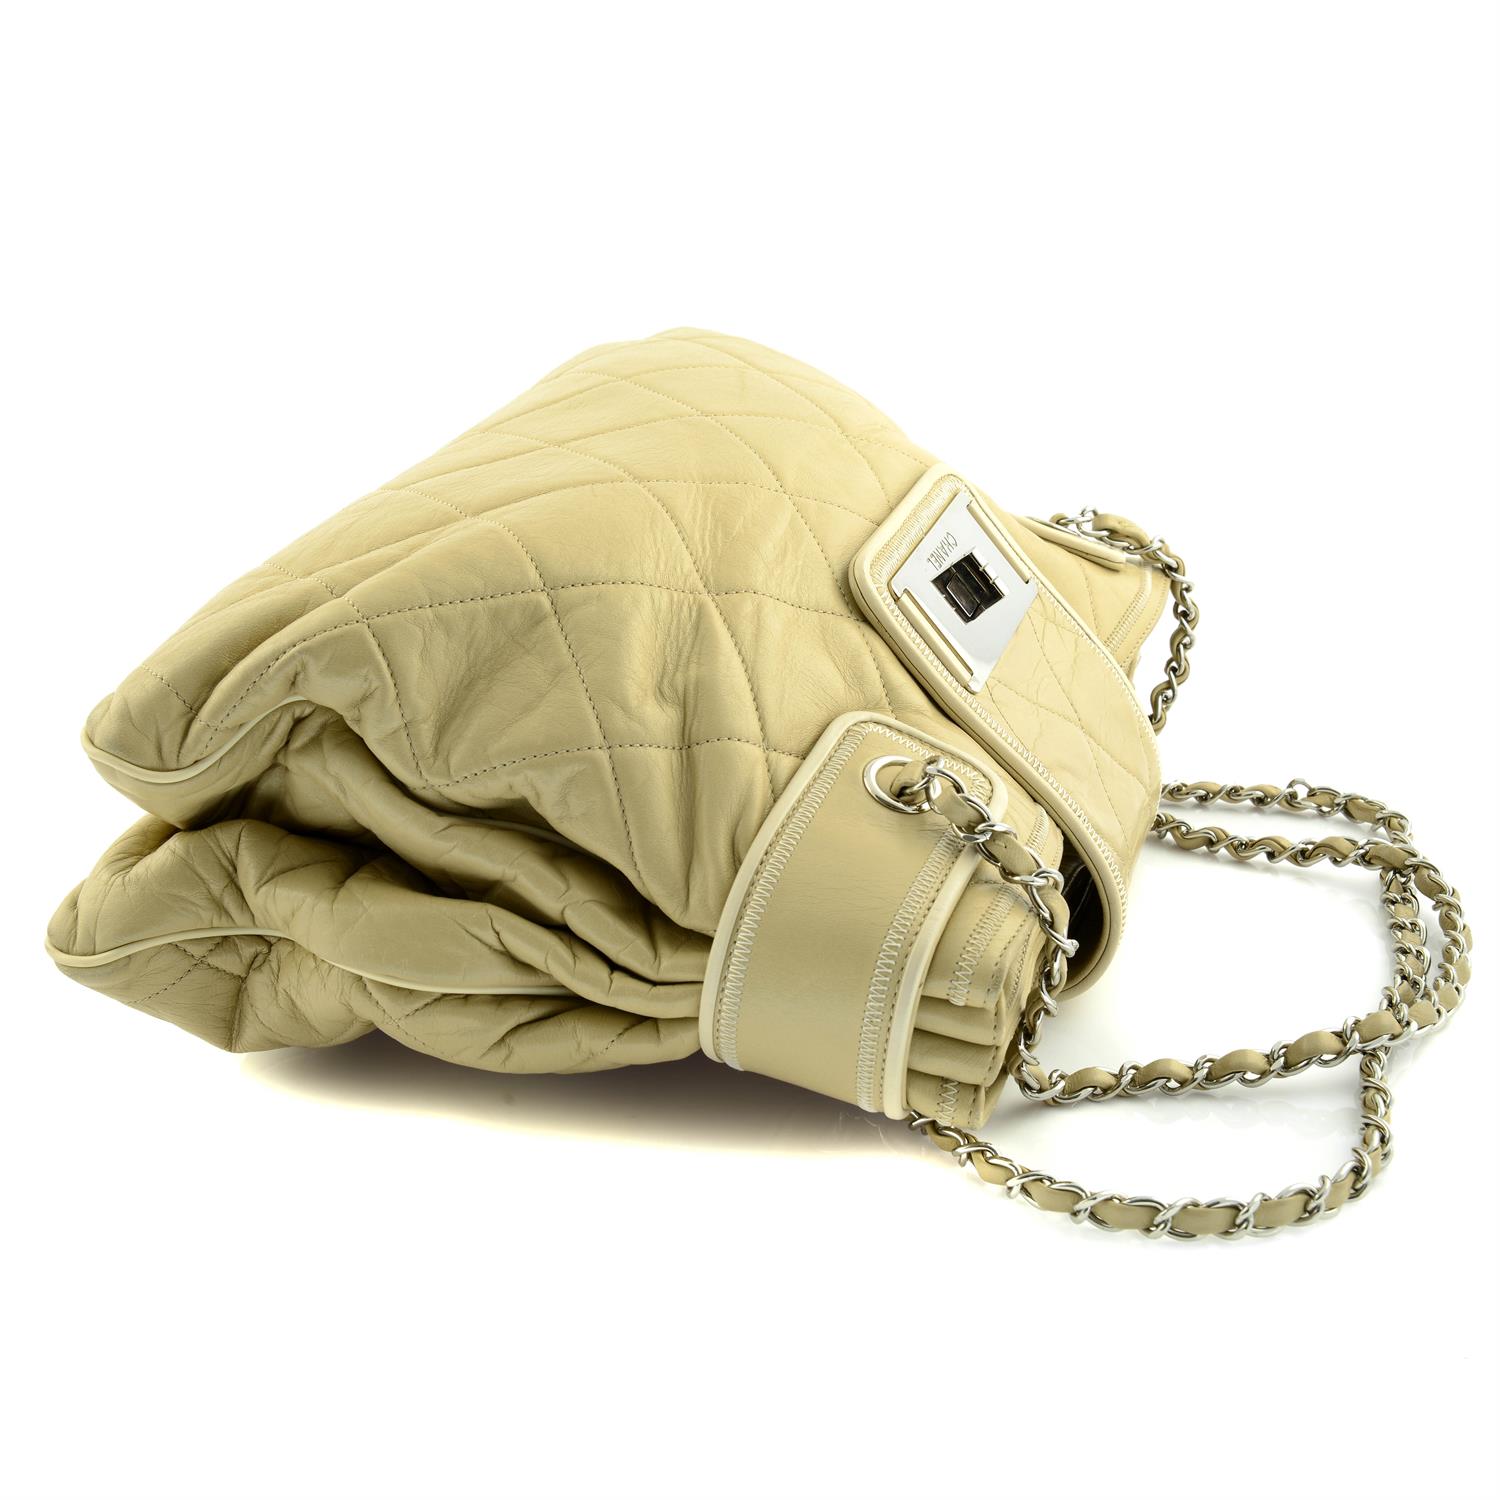 CHANEL - A beige cream shopper handbag - Image 3 of 5